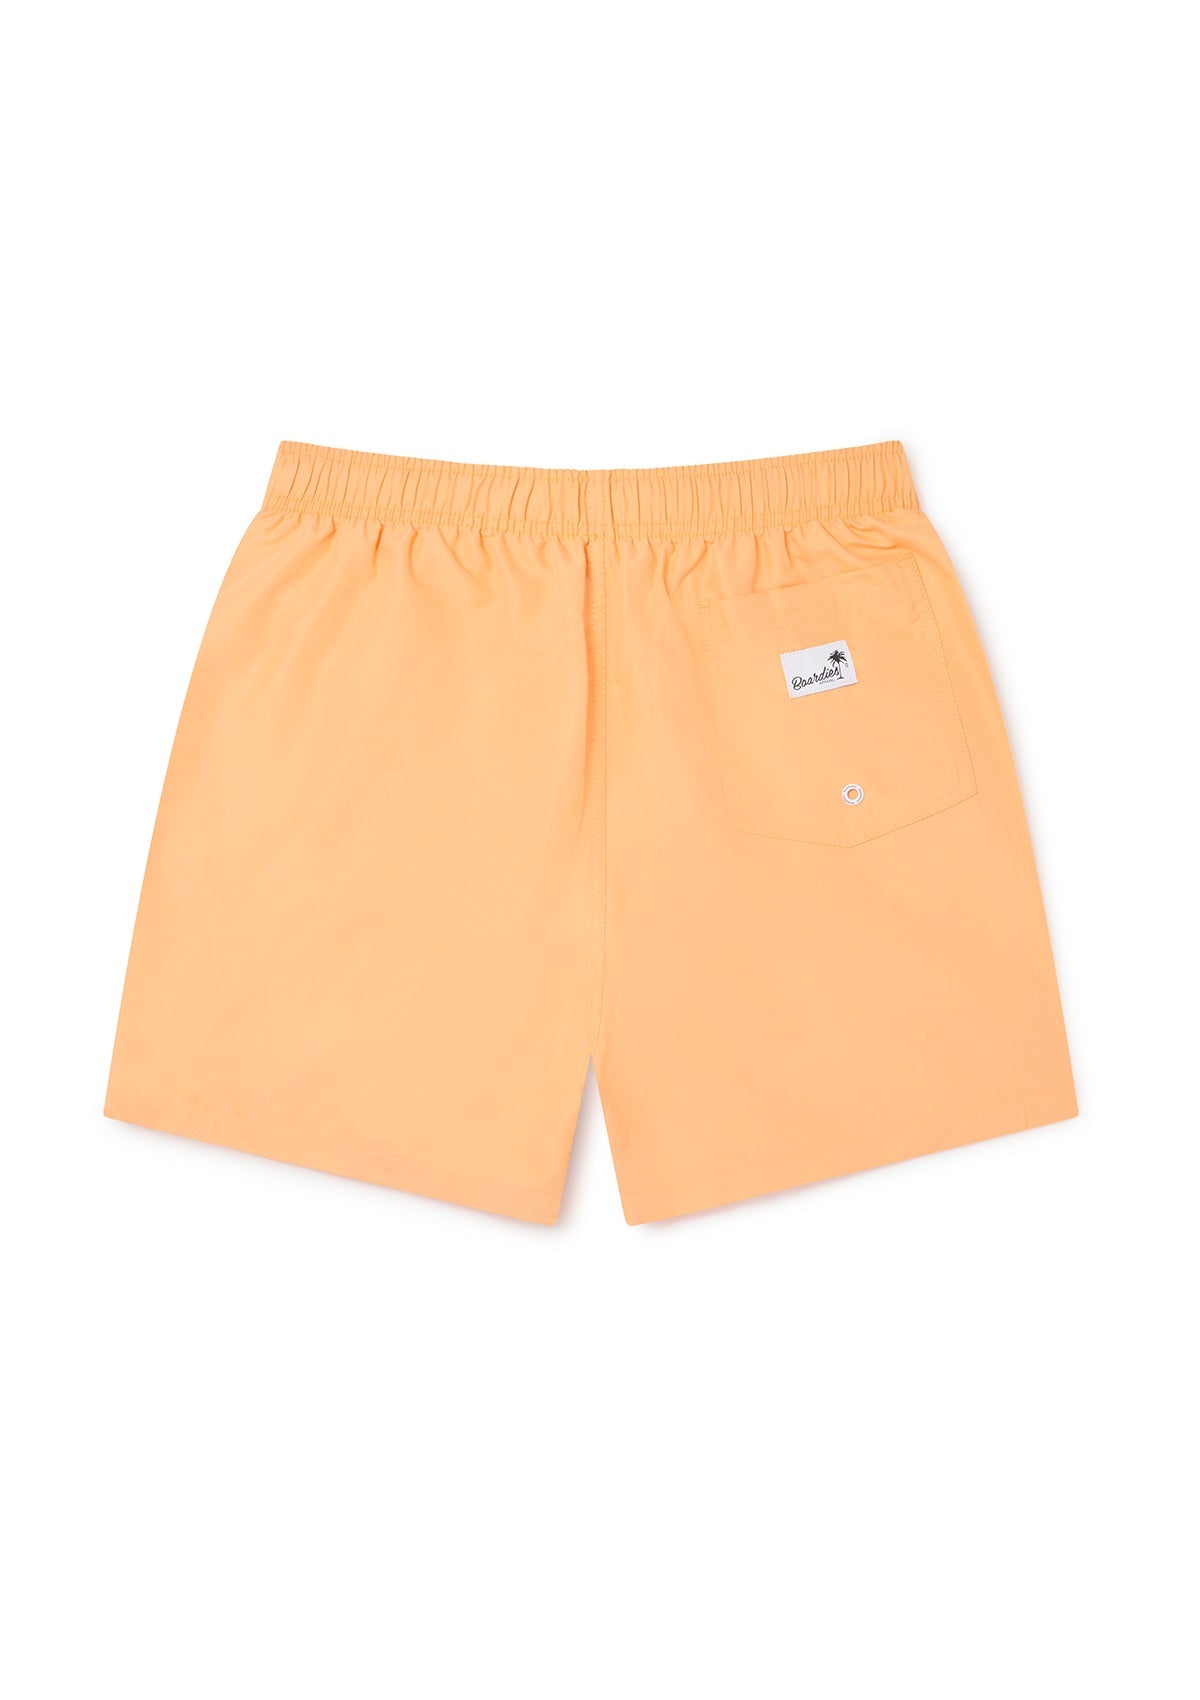 Tangerine Swim Shorts